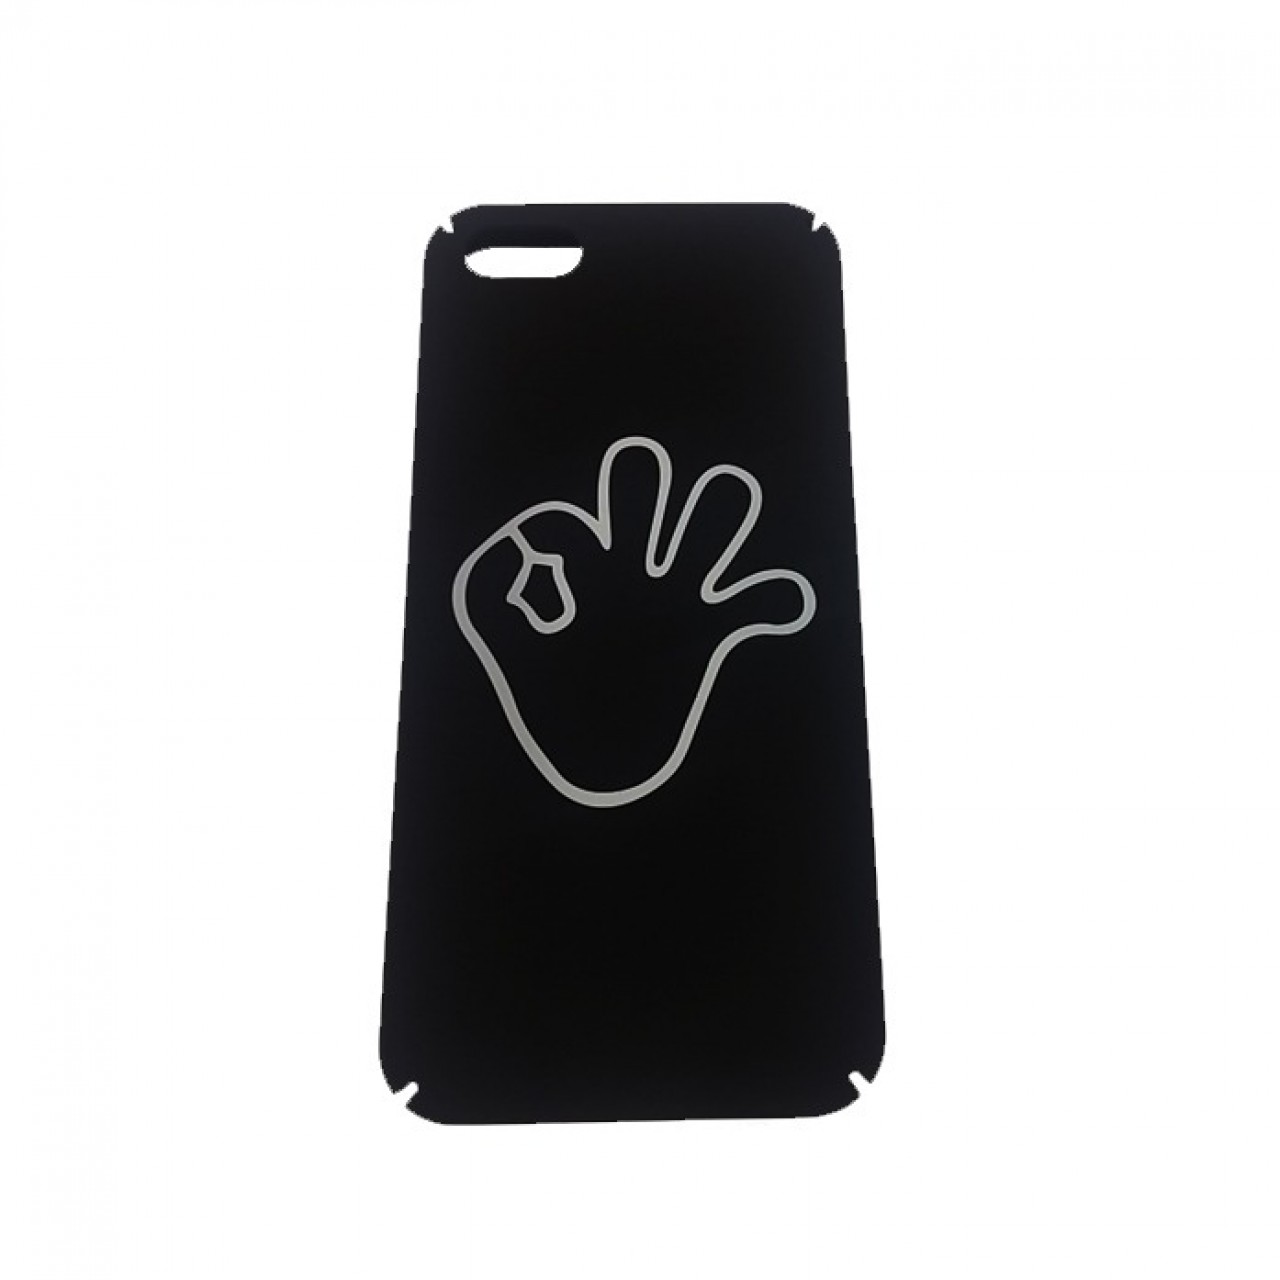 iPhone 5/5S Fantastic Logo Hard Case - Black